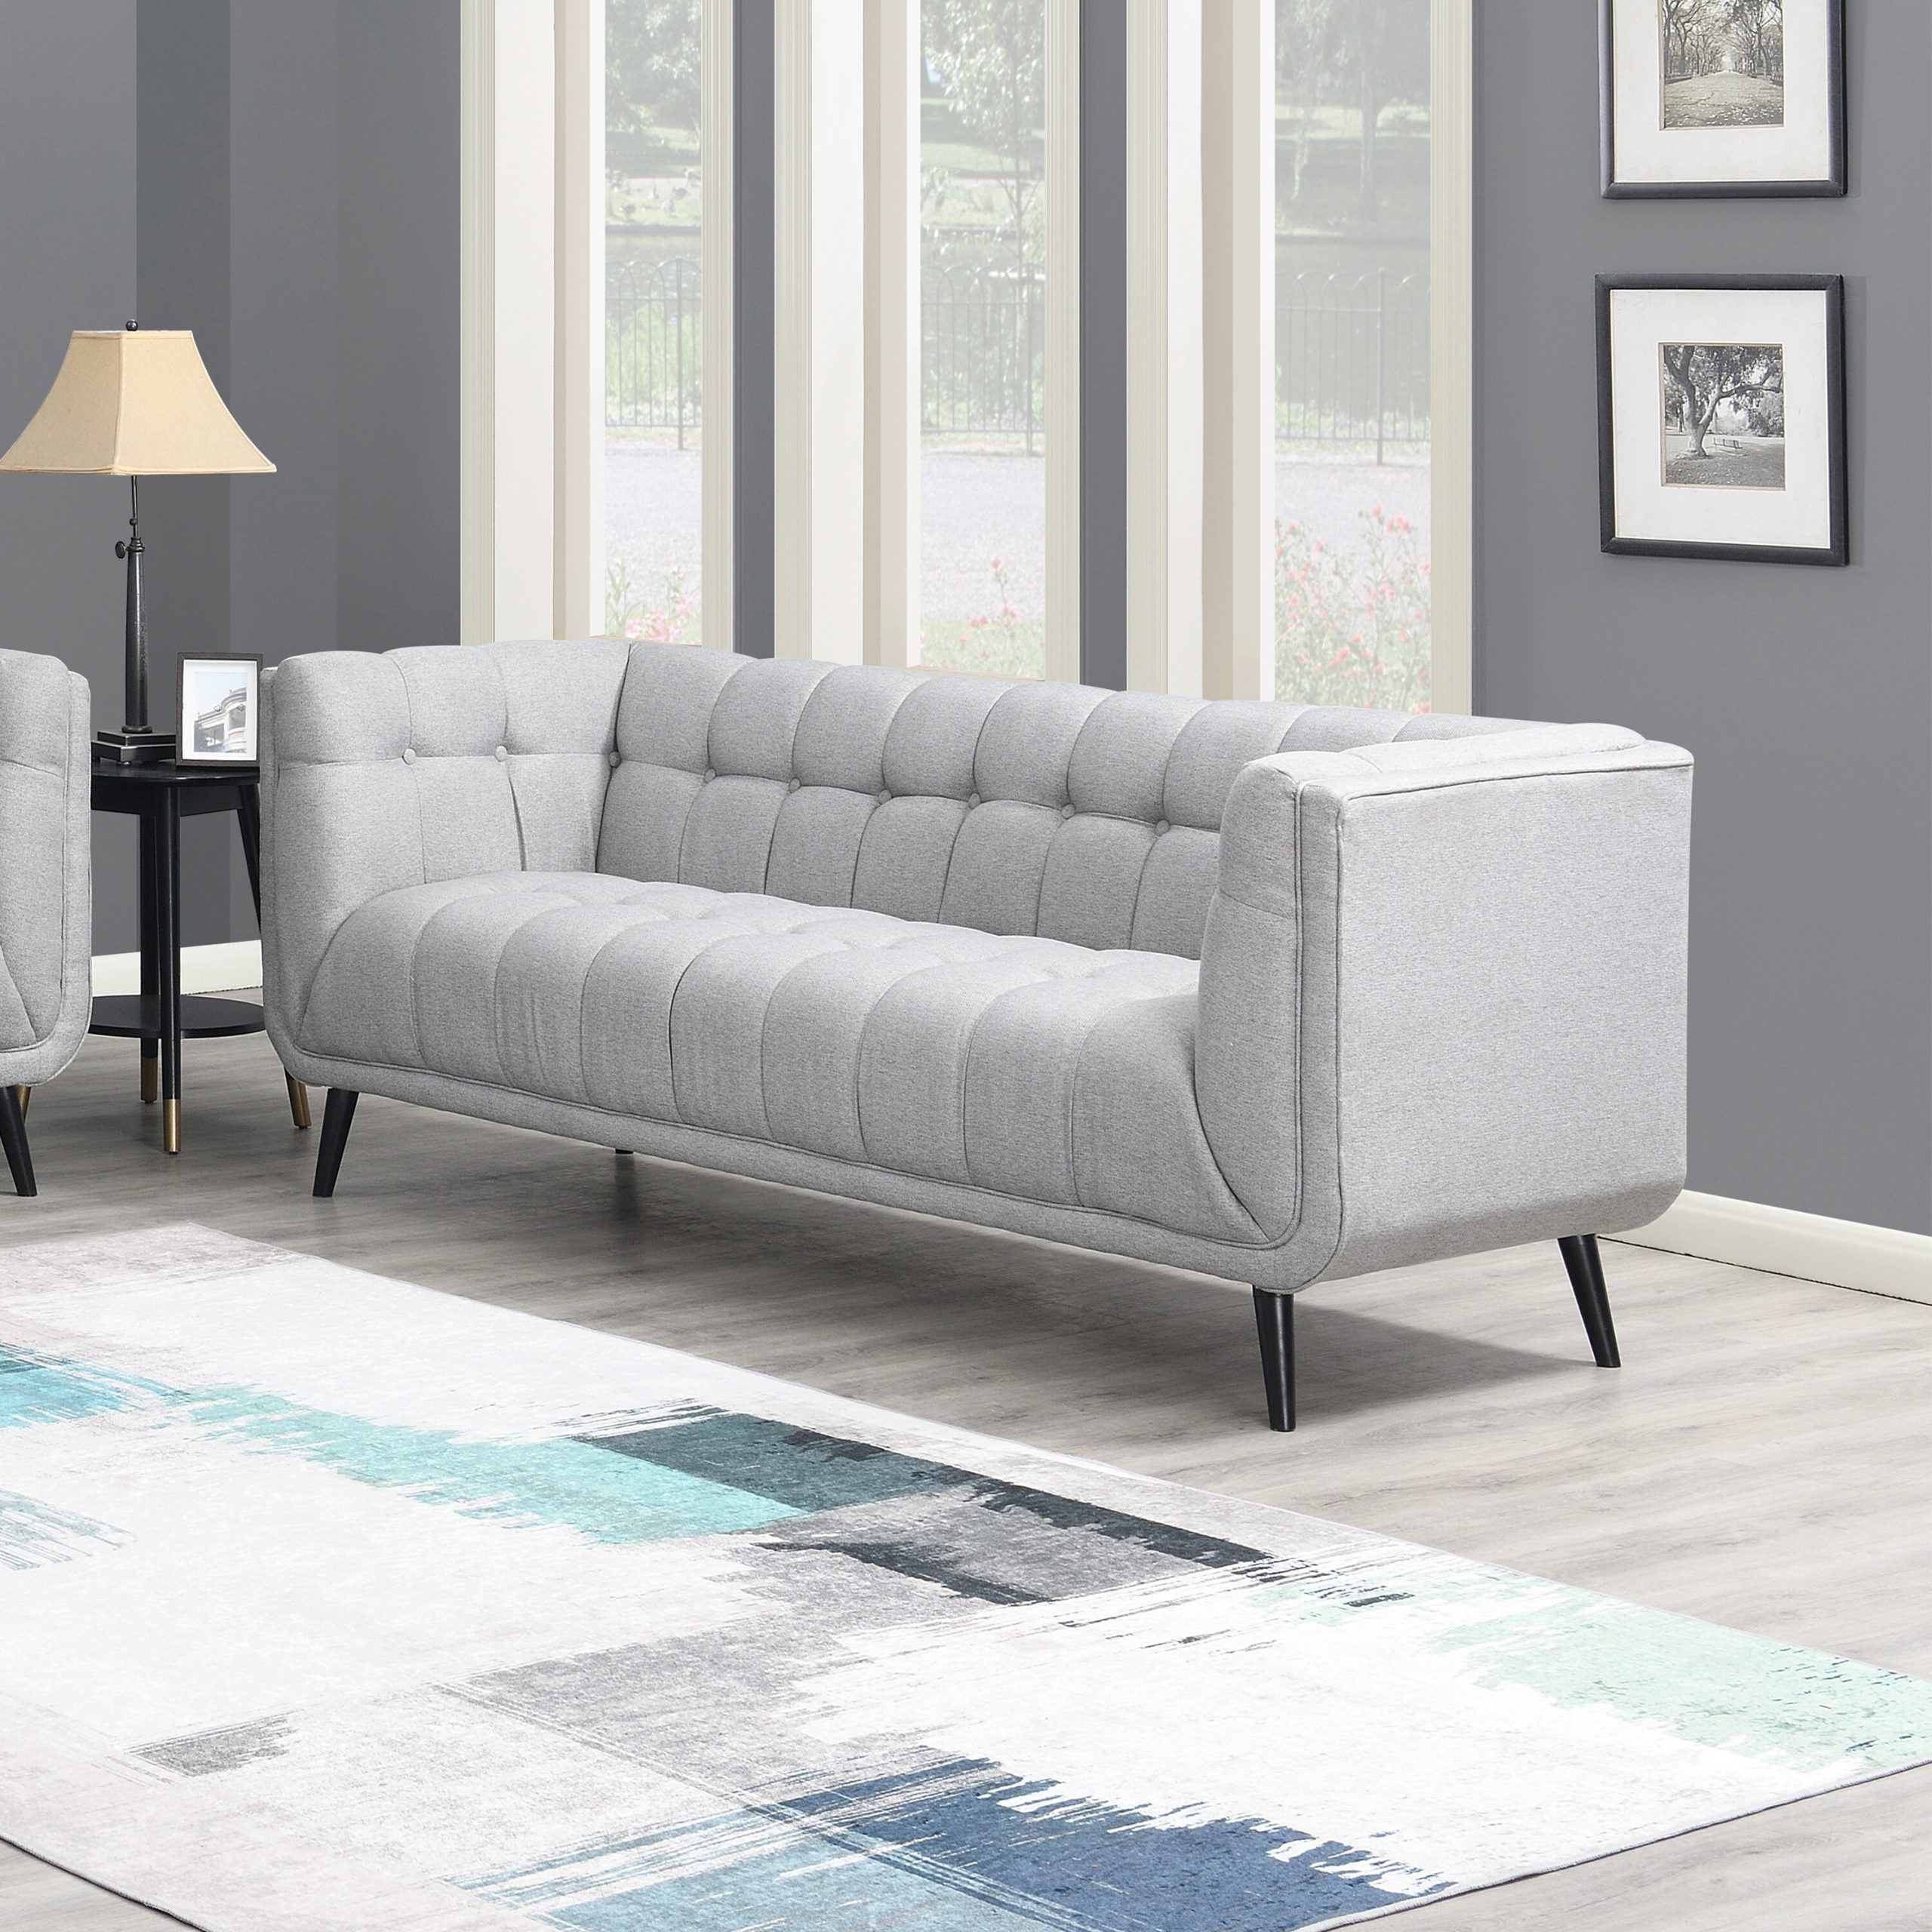 Corrigan Studio® Modern Mid Century Button Tufted Upholstered Sofa, Gray |  Wayfair Pertaining To Tufted Upholstered Sofas (View 5 of 15)